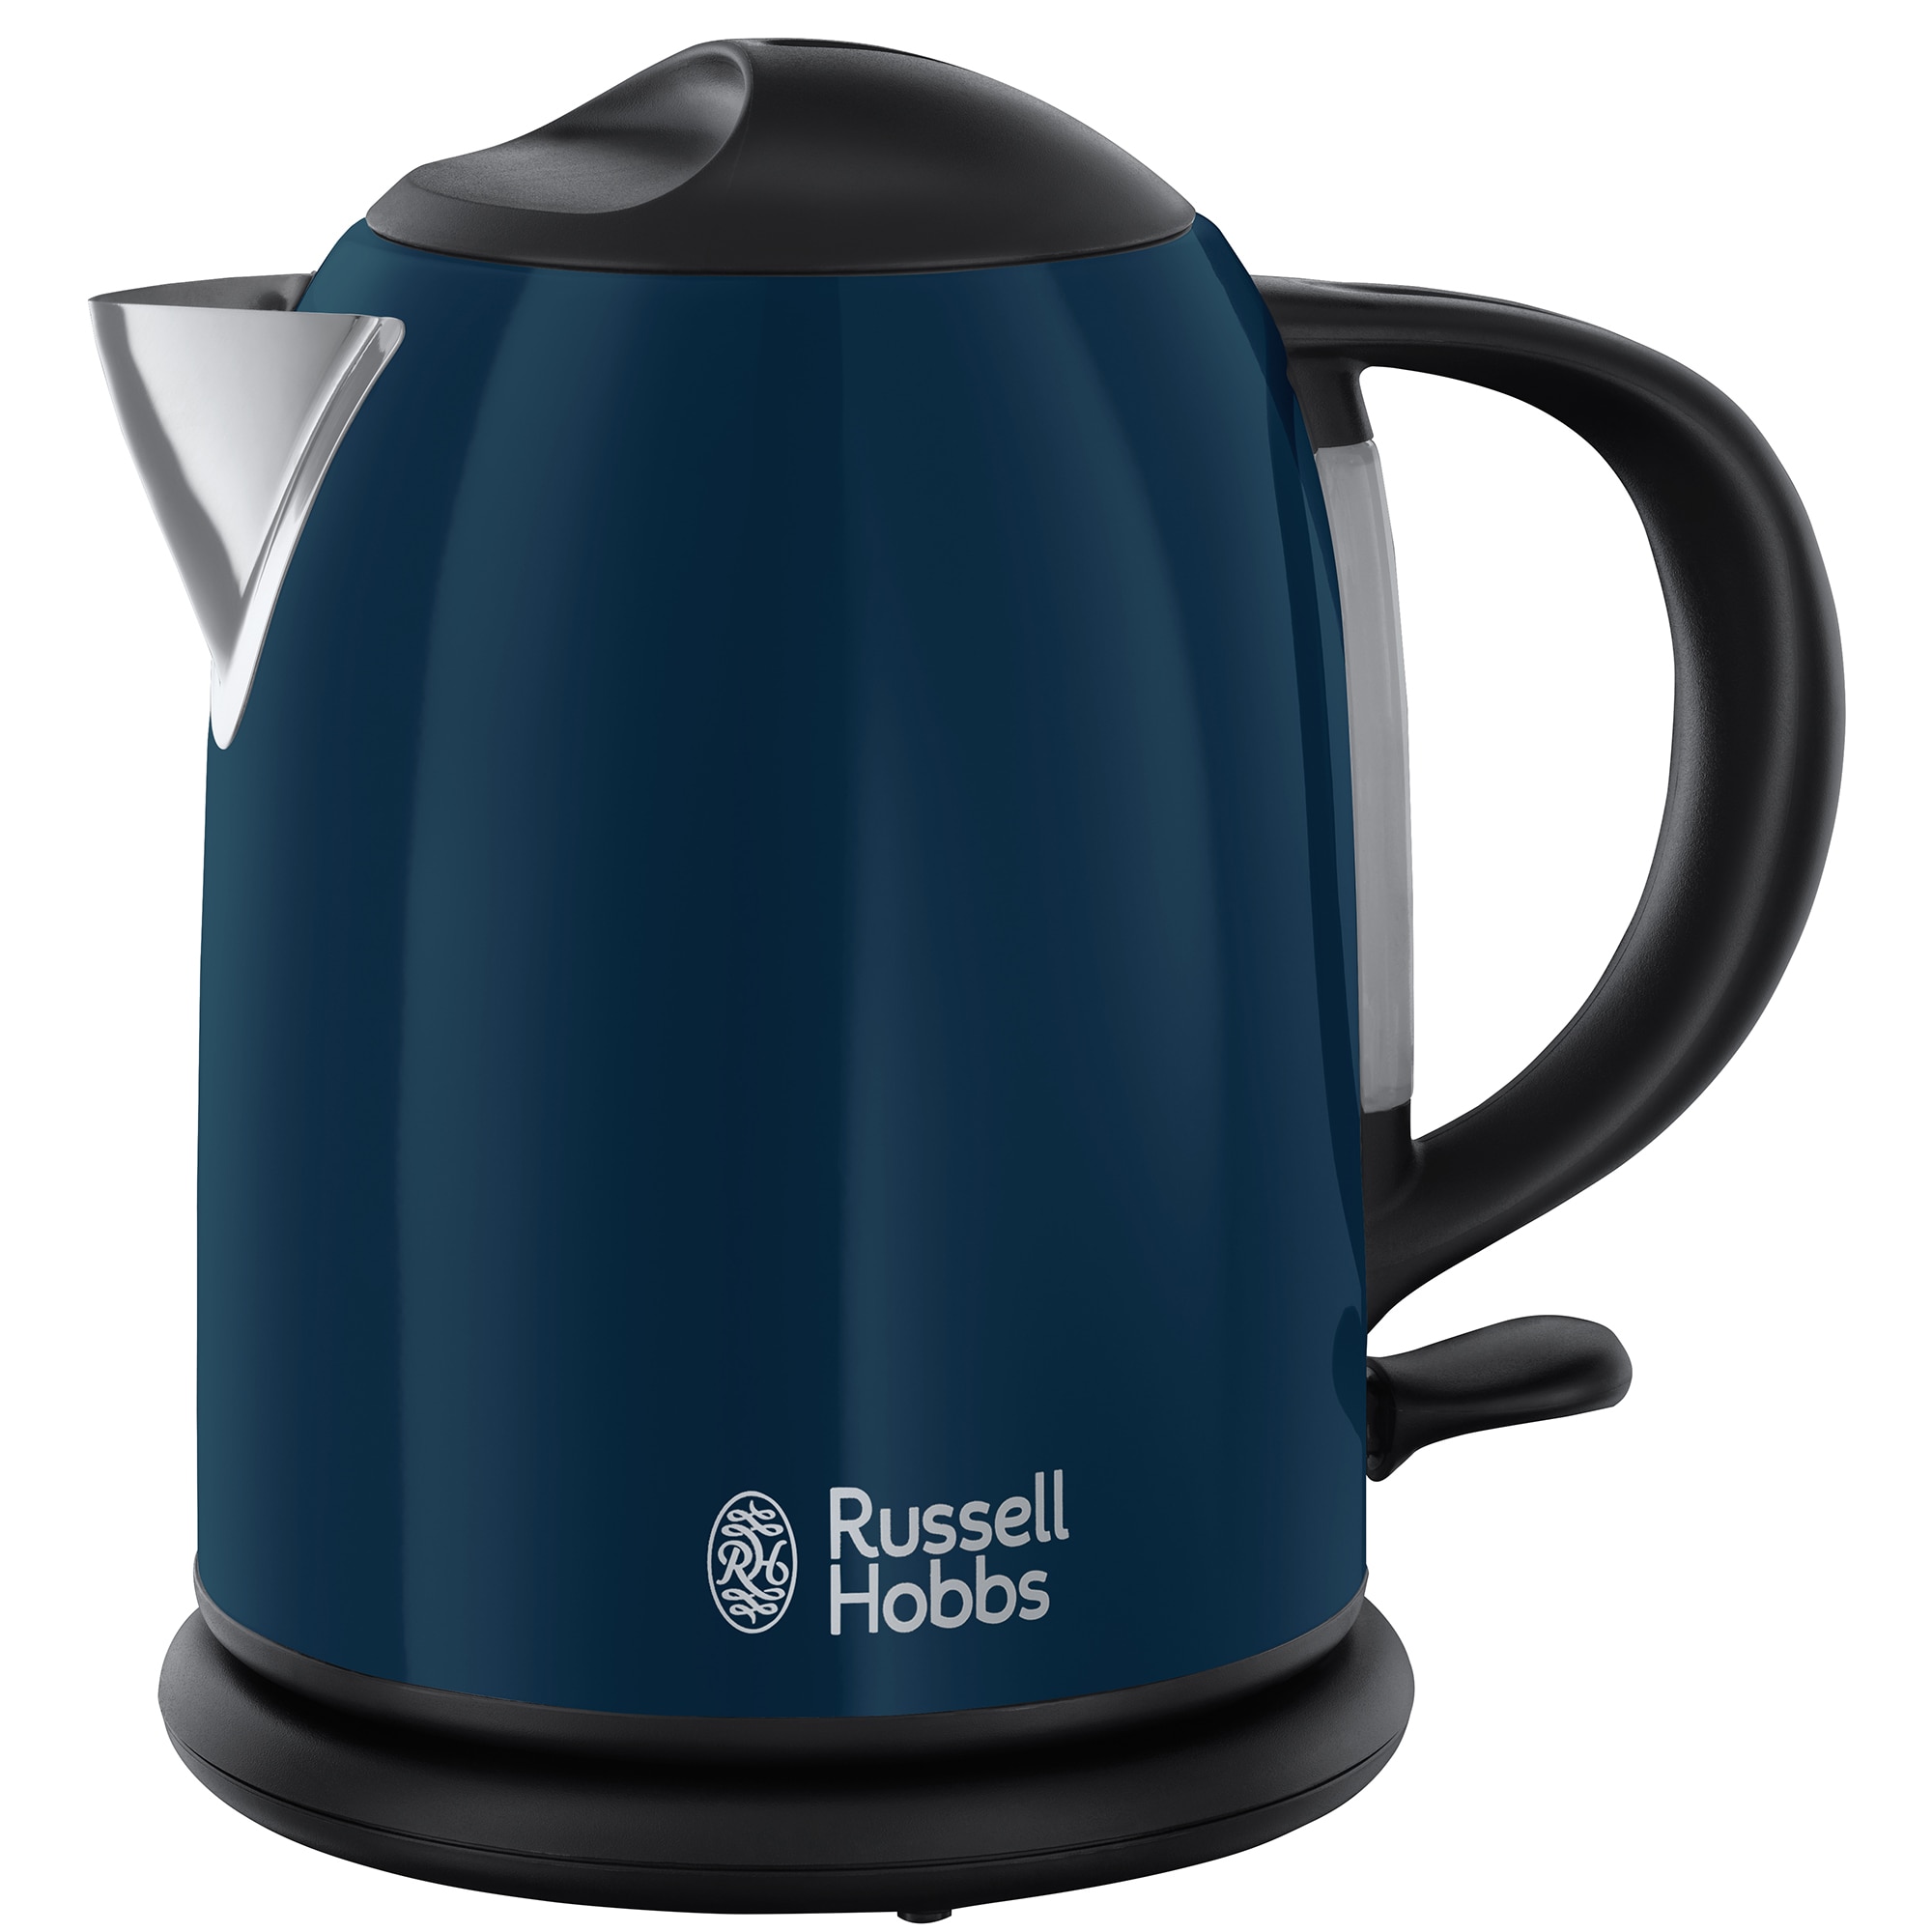 Роял компакт. Russel Hobs Color Blue чайник. Электрочайник Russell Hobbs 24190-70 (Compact Home kettle).